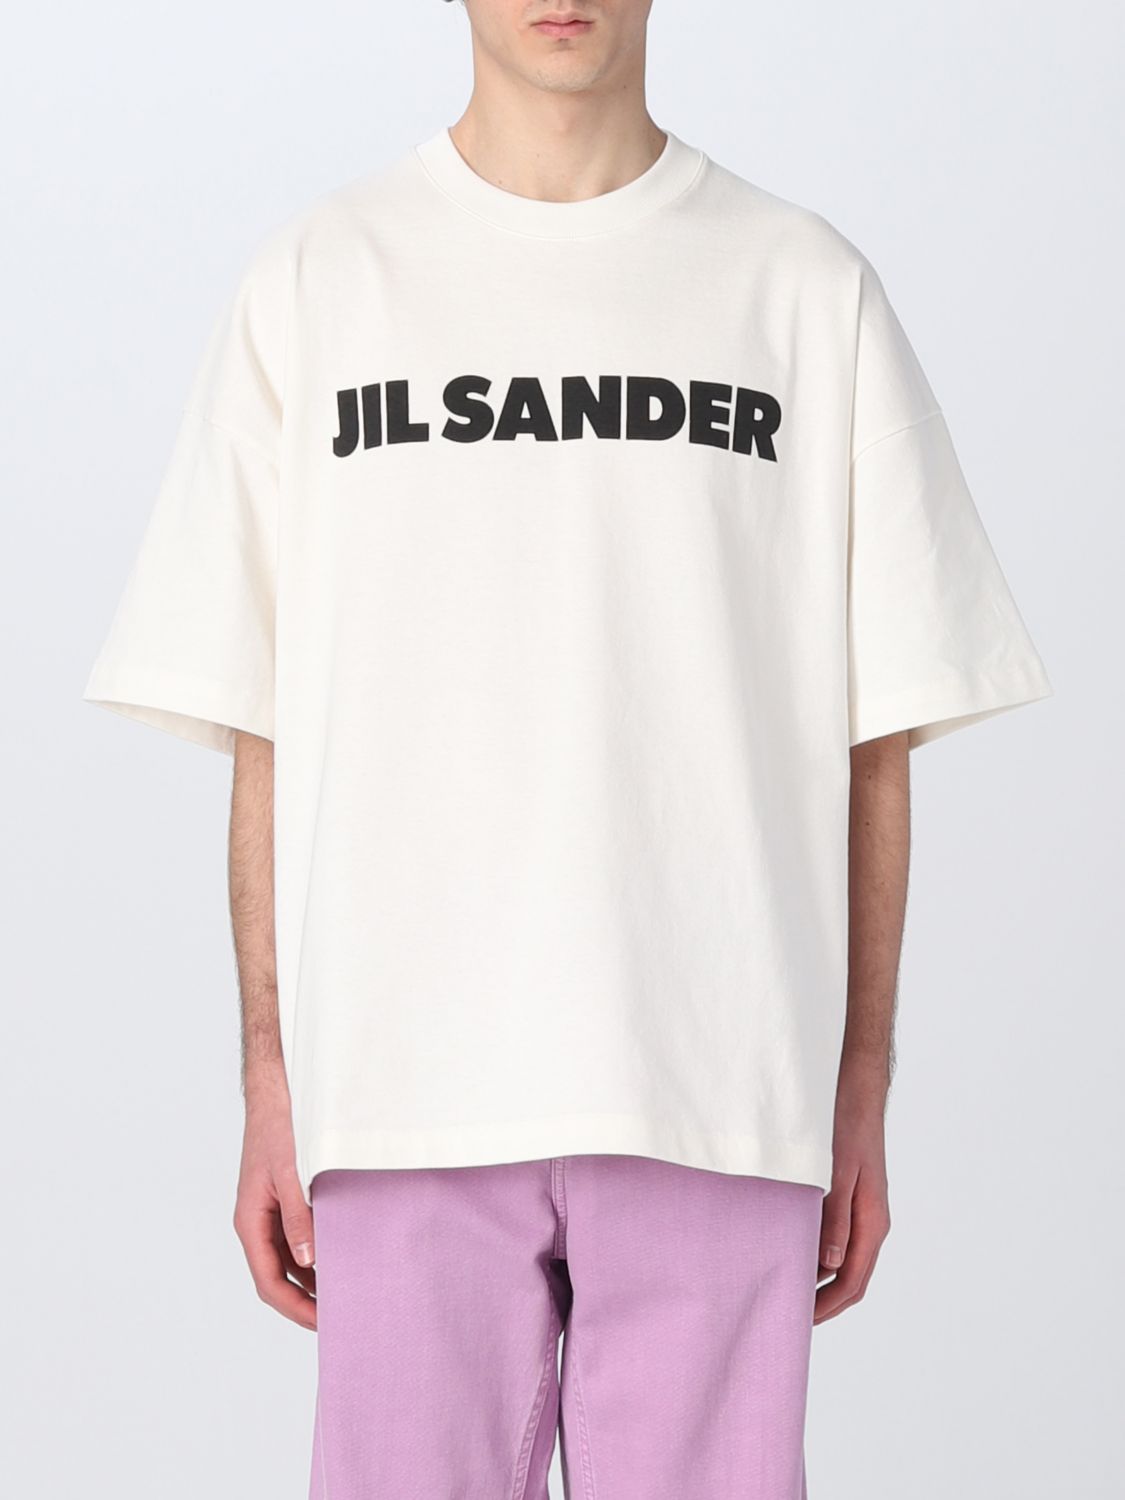 JIL SANDER: for man - White | Jil t-shirt J21GC0001J45148 online on GIGLIO.COM